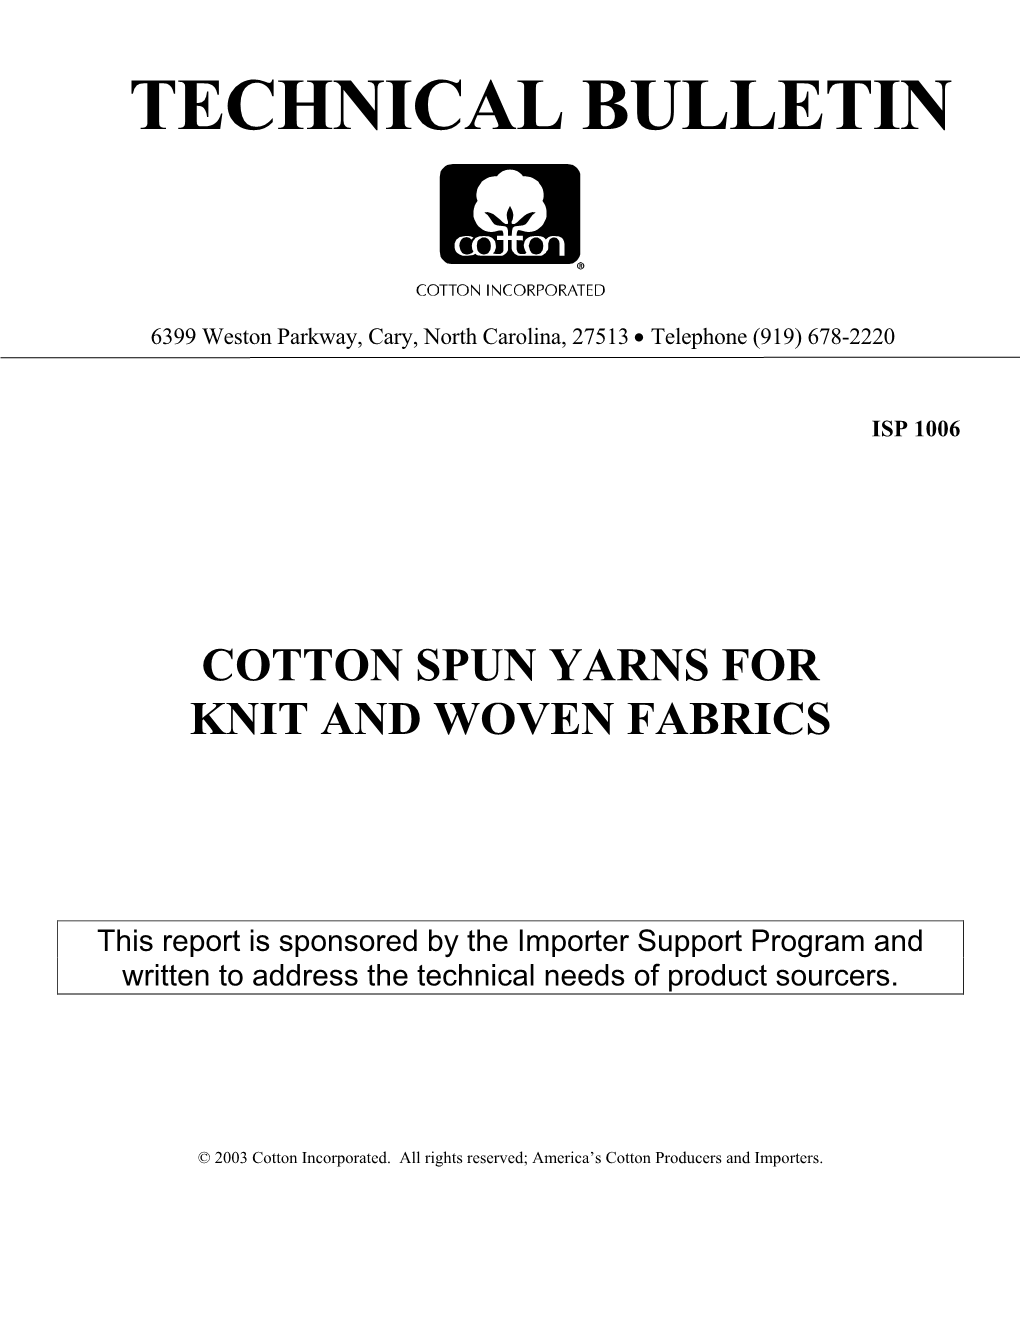 Cotton Spun Yarns for Knit and Woven Fabrics